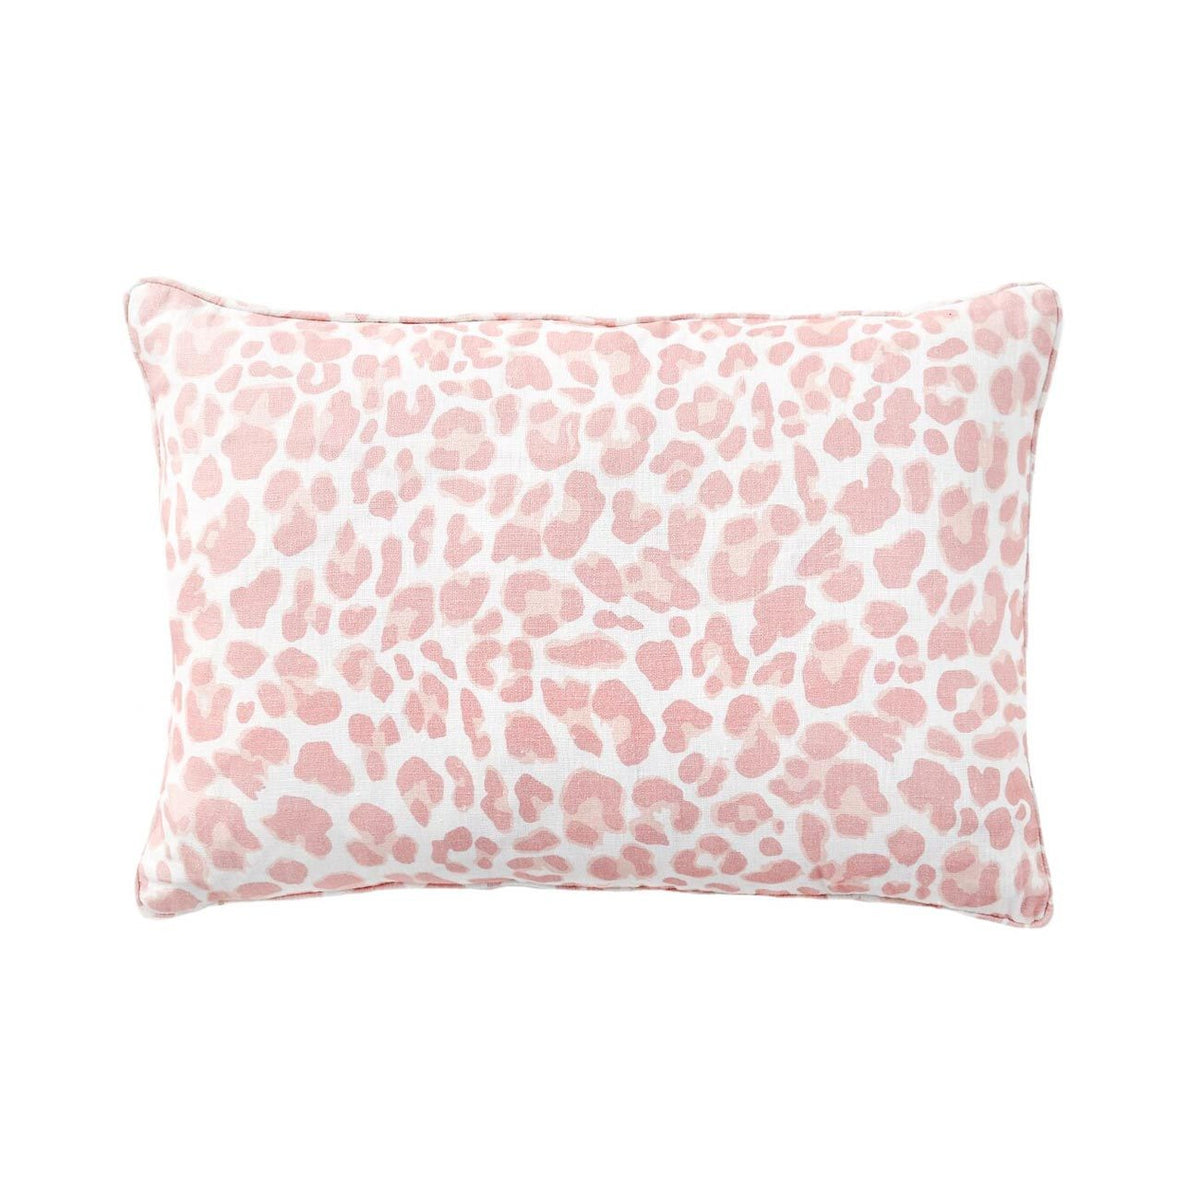 Blush Leopard Pillow